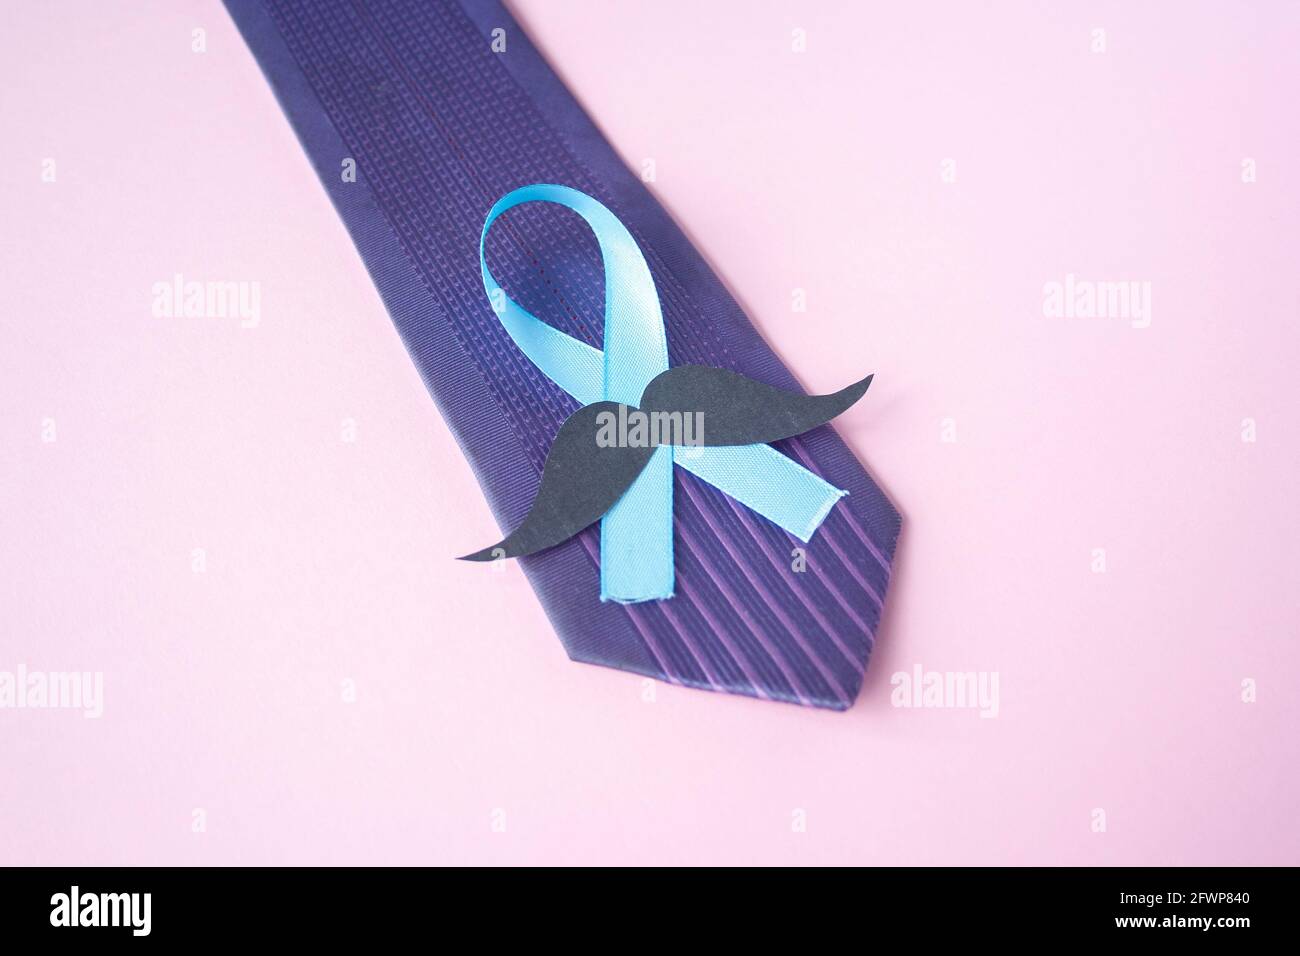 Prostatakrebs Bewusstsein, Licht Blue Ribbon Stockfoto